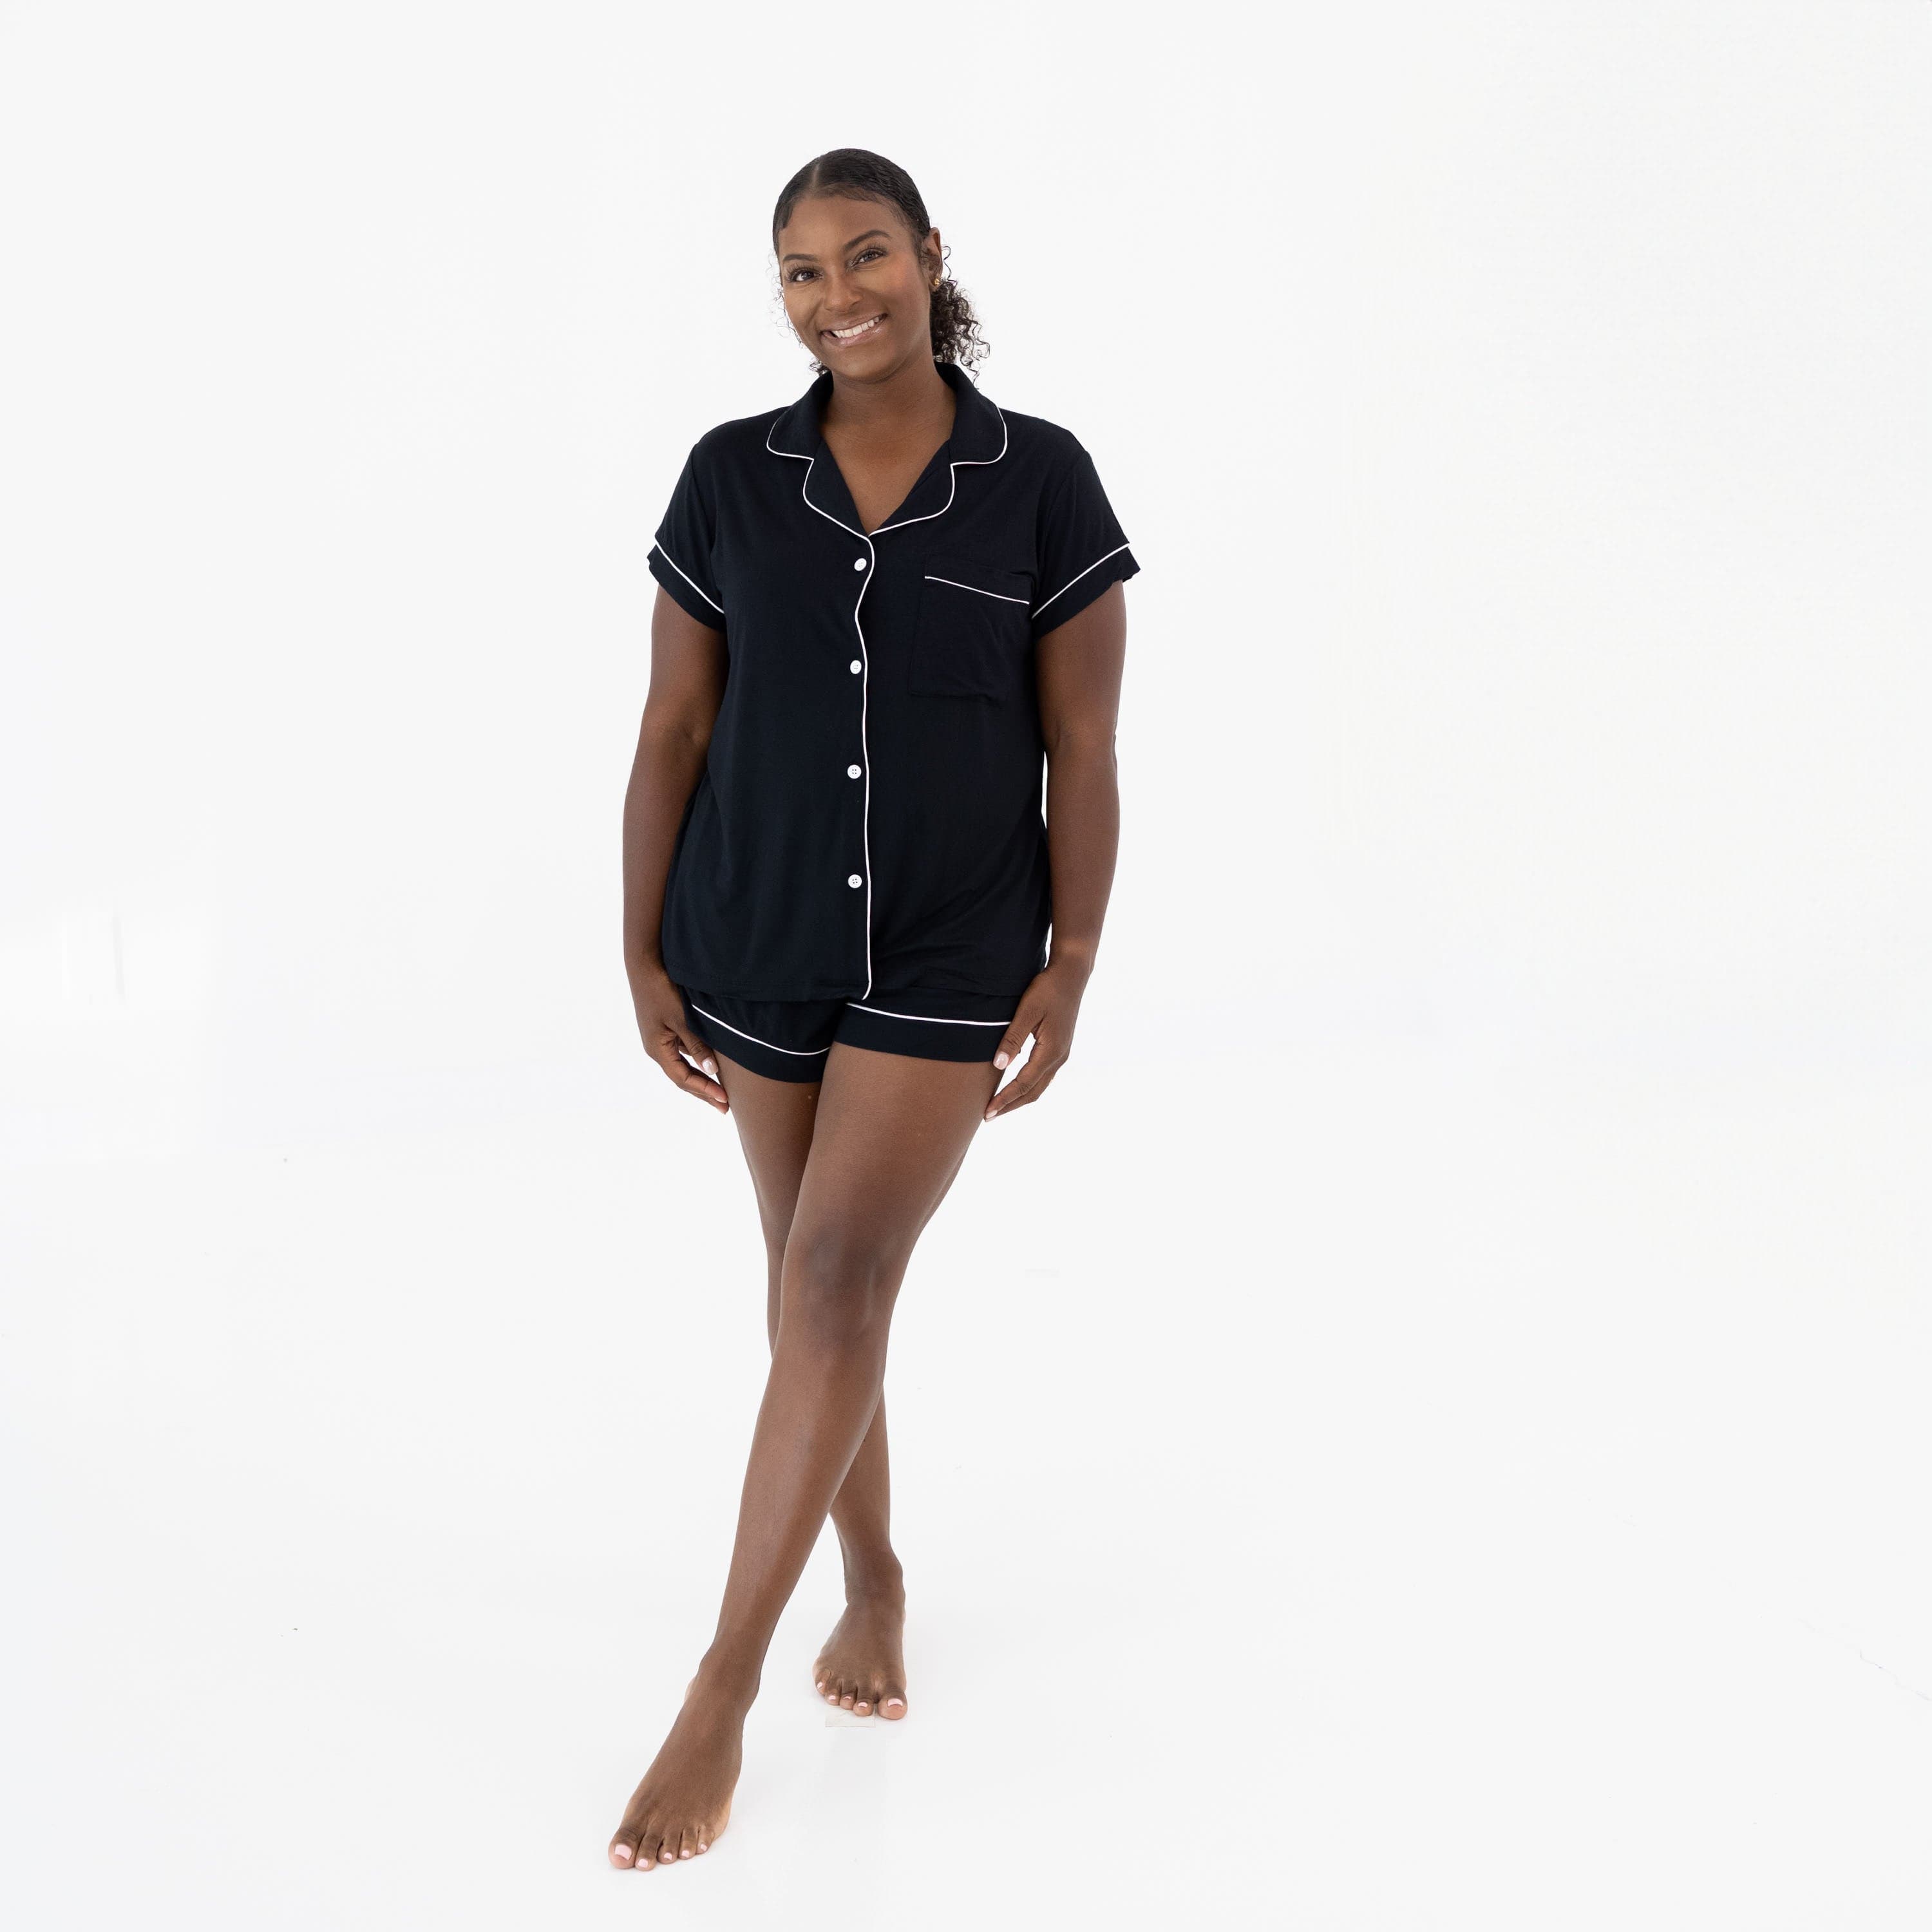 Kyte Baby Women's Long Sleeve Pajama Set in Mushroom - Active Baby Canadian  Online Baby Store